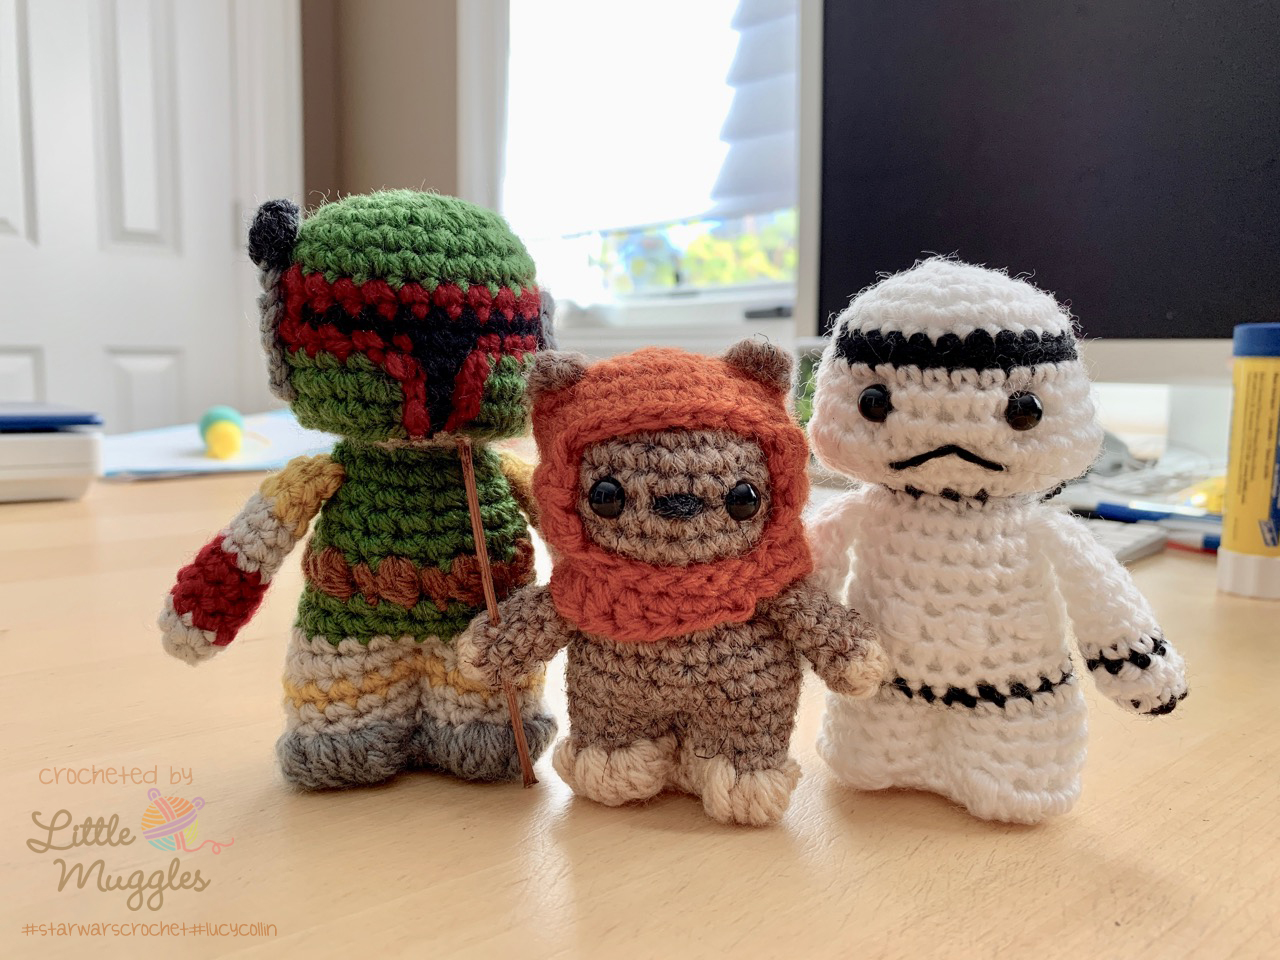 Star Wars Crochet review